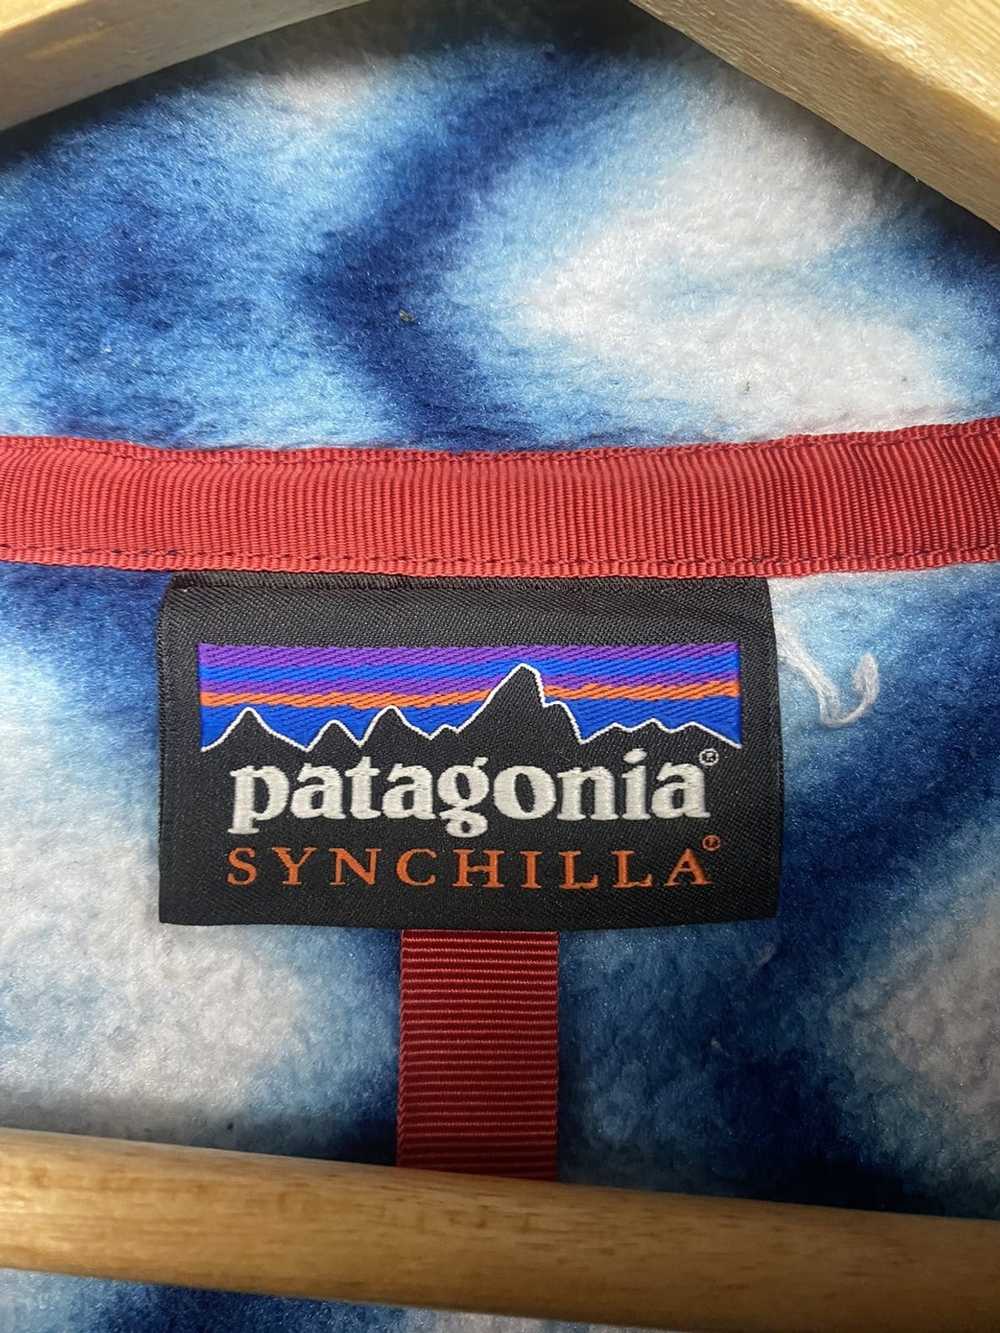 Patagonia Patagonia sychilla - image 6